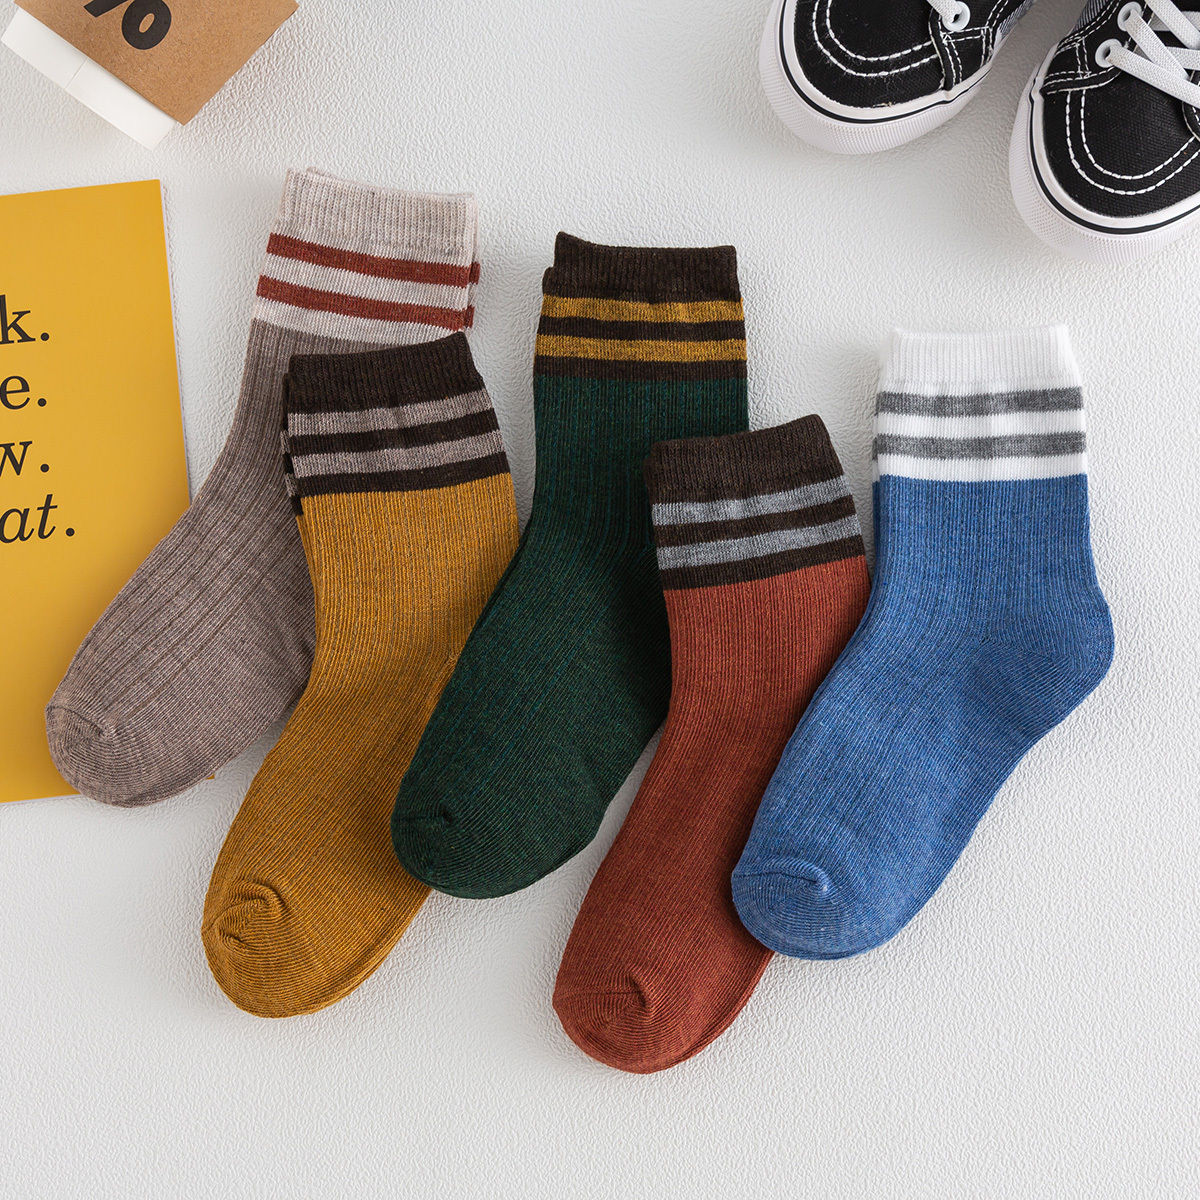 12 Pairs Toddler Boys Kids Socks With Grip Non-slip Bottom, Breathable  Comfy Crew Socks For Infants Baby Children